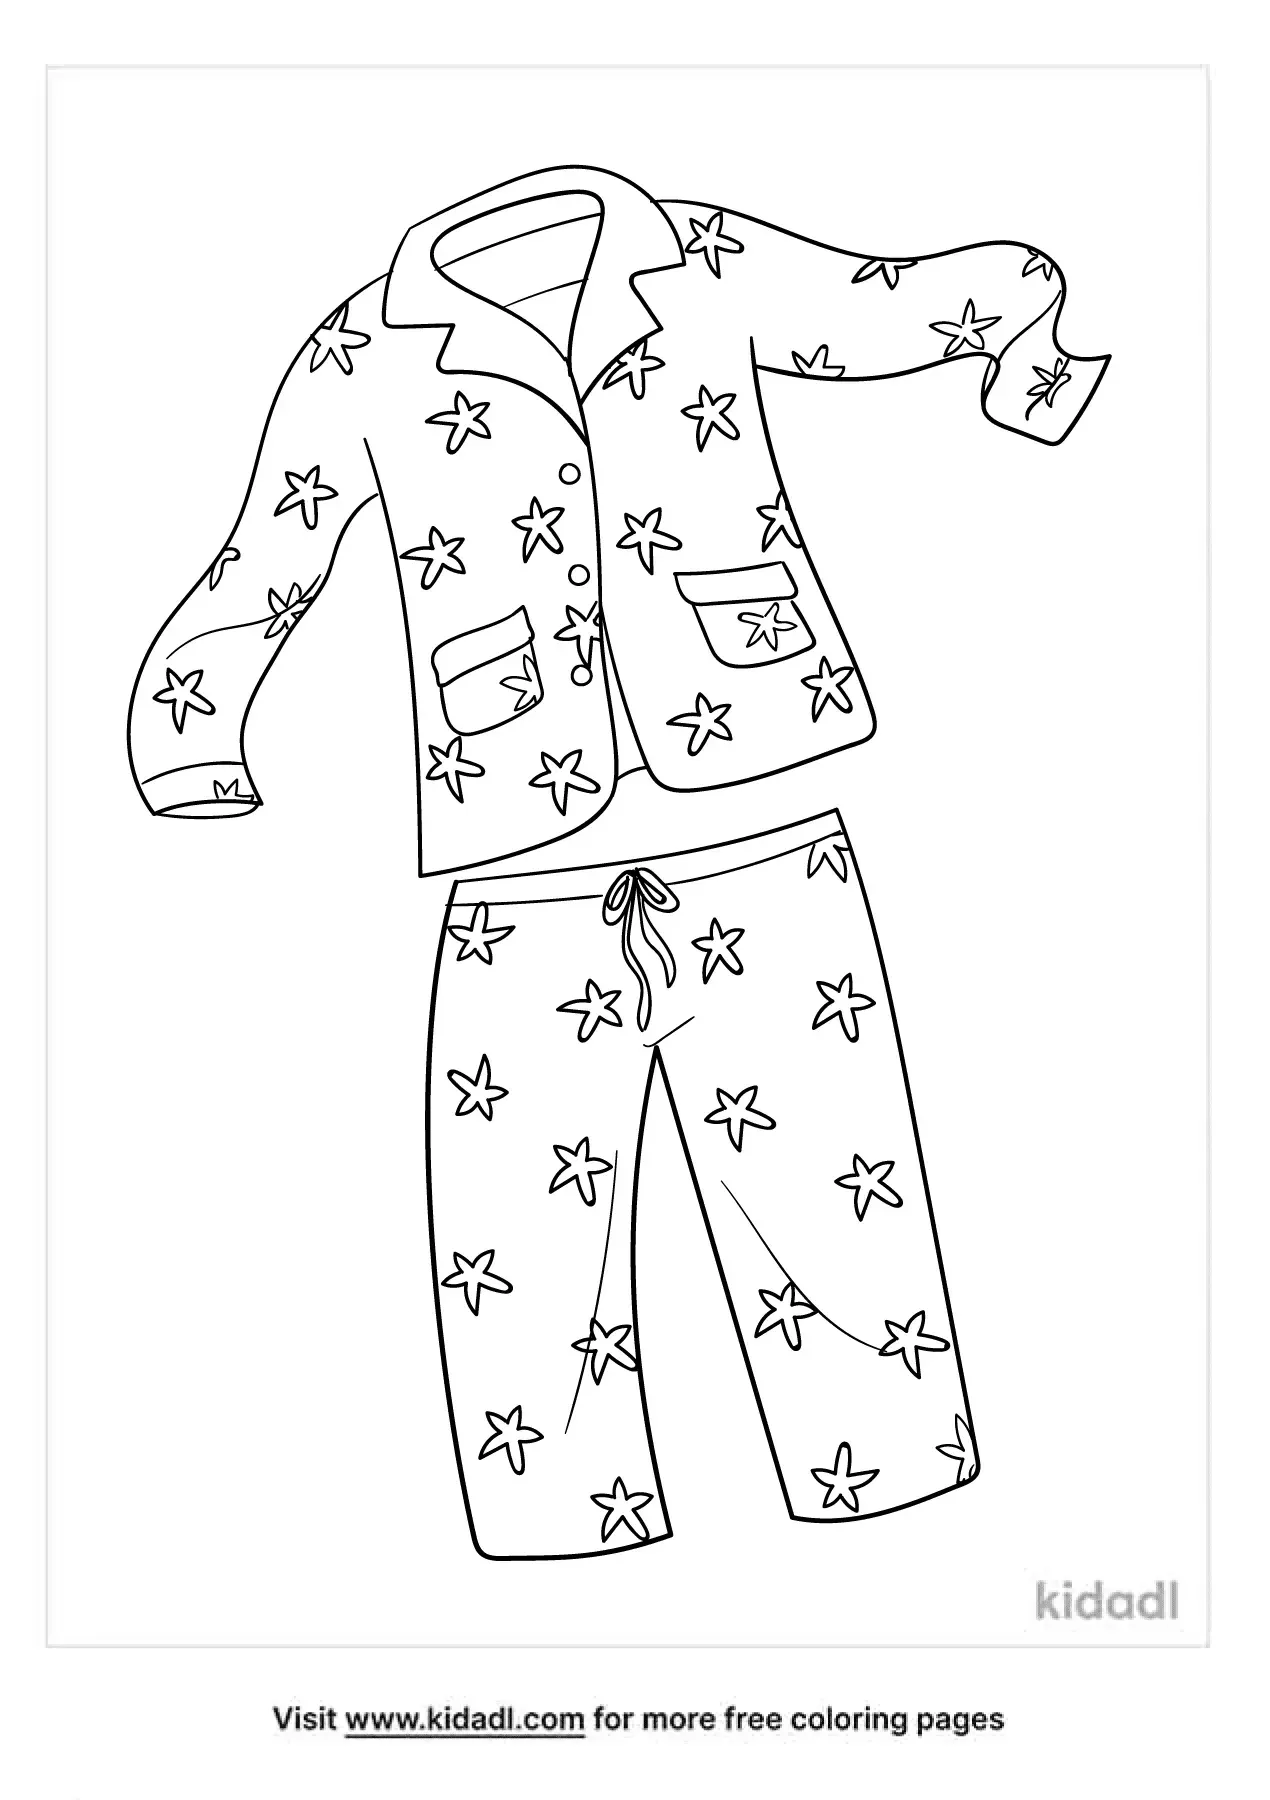 free-pajamas-coloring-page-coloring-page-printables-kidadl